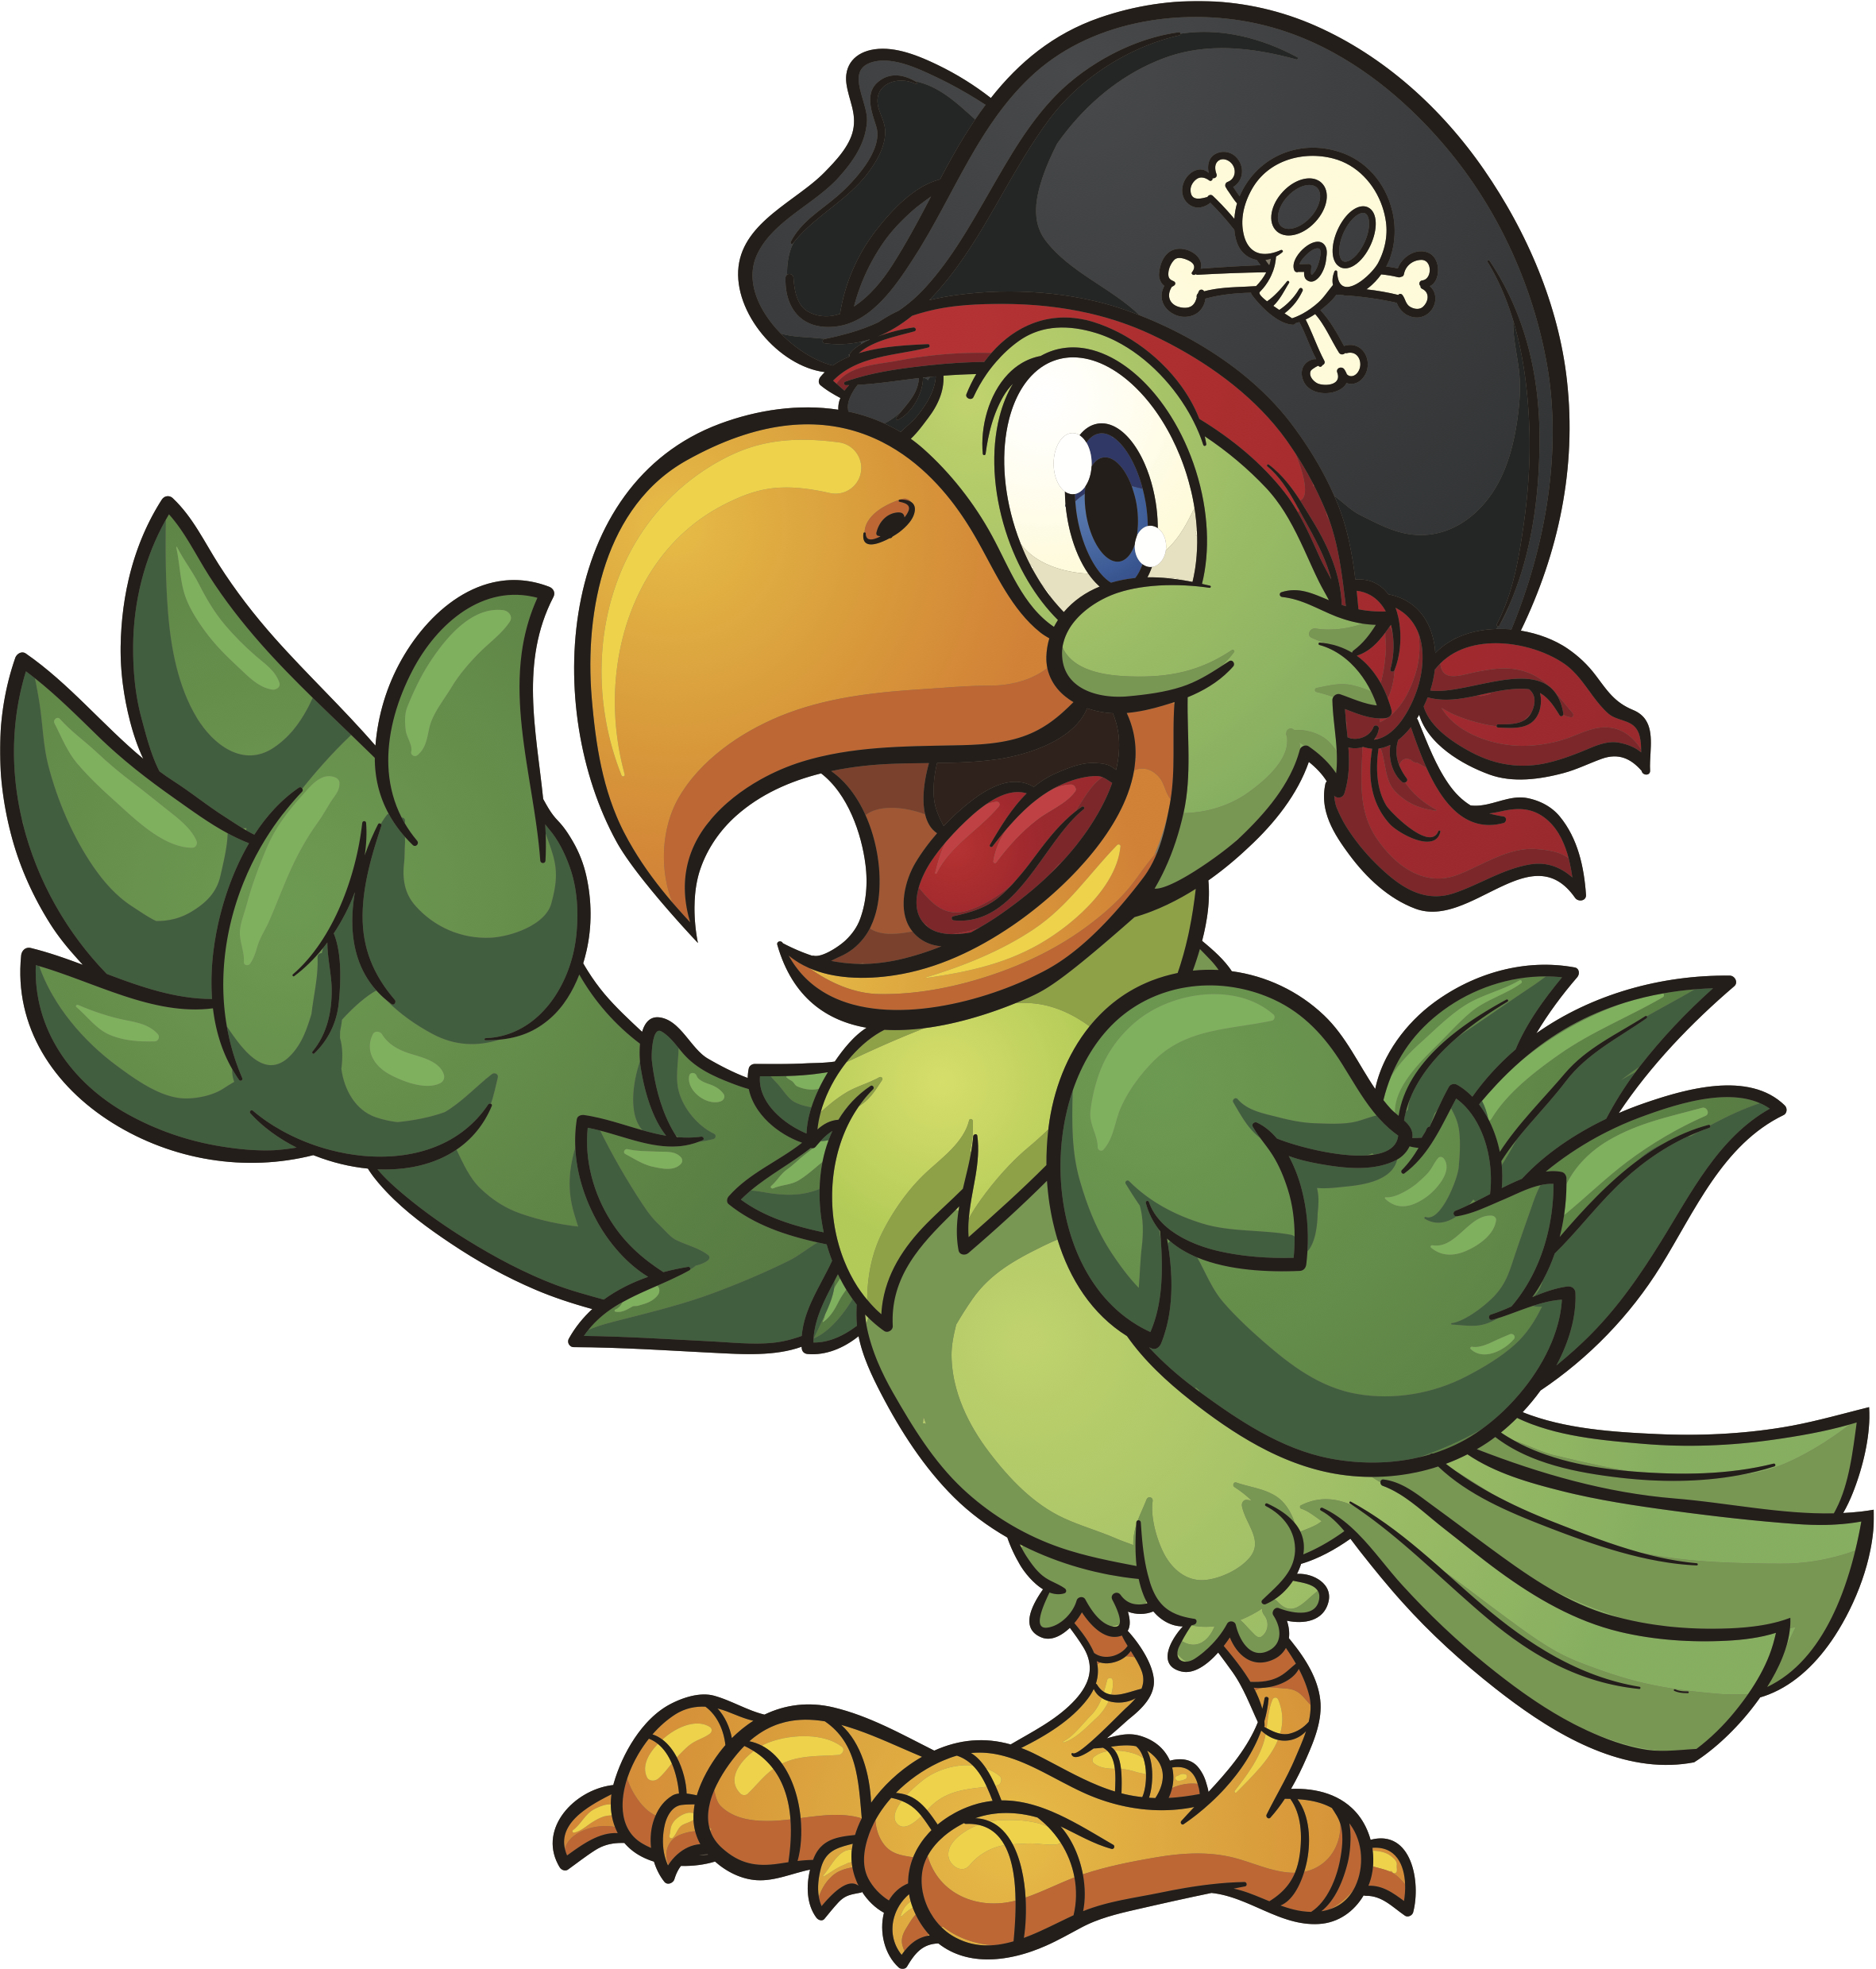 Pirates Parrot Pirate Hat Free Image On Pixabay.